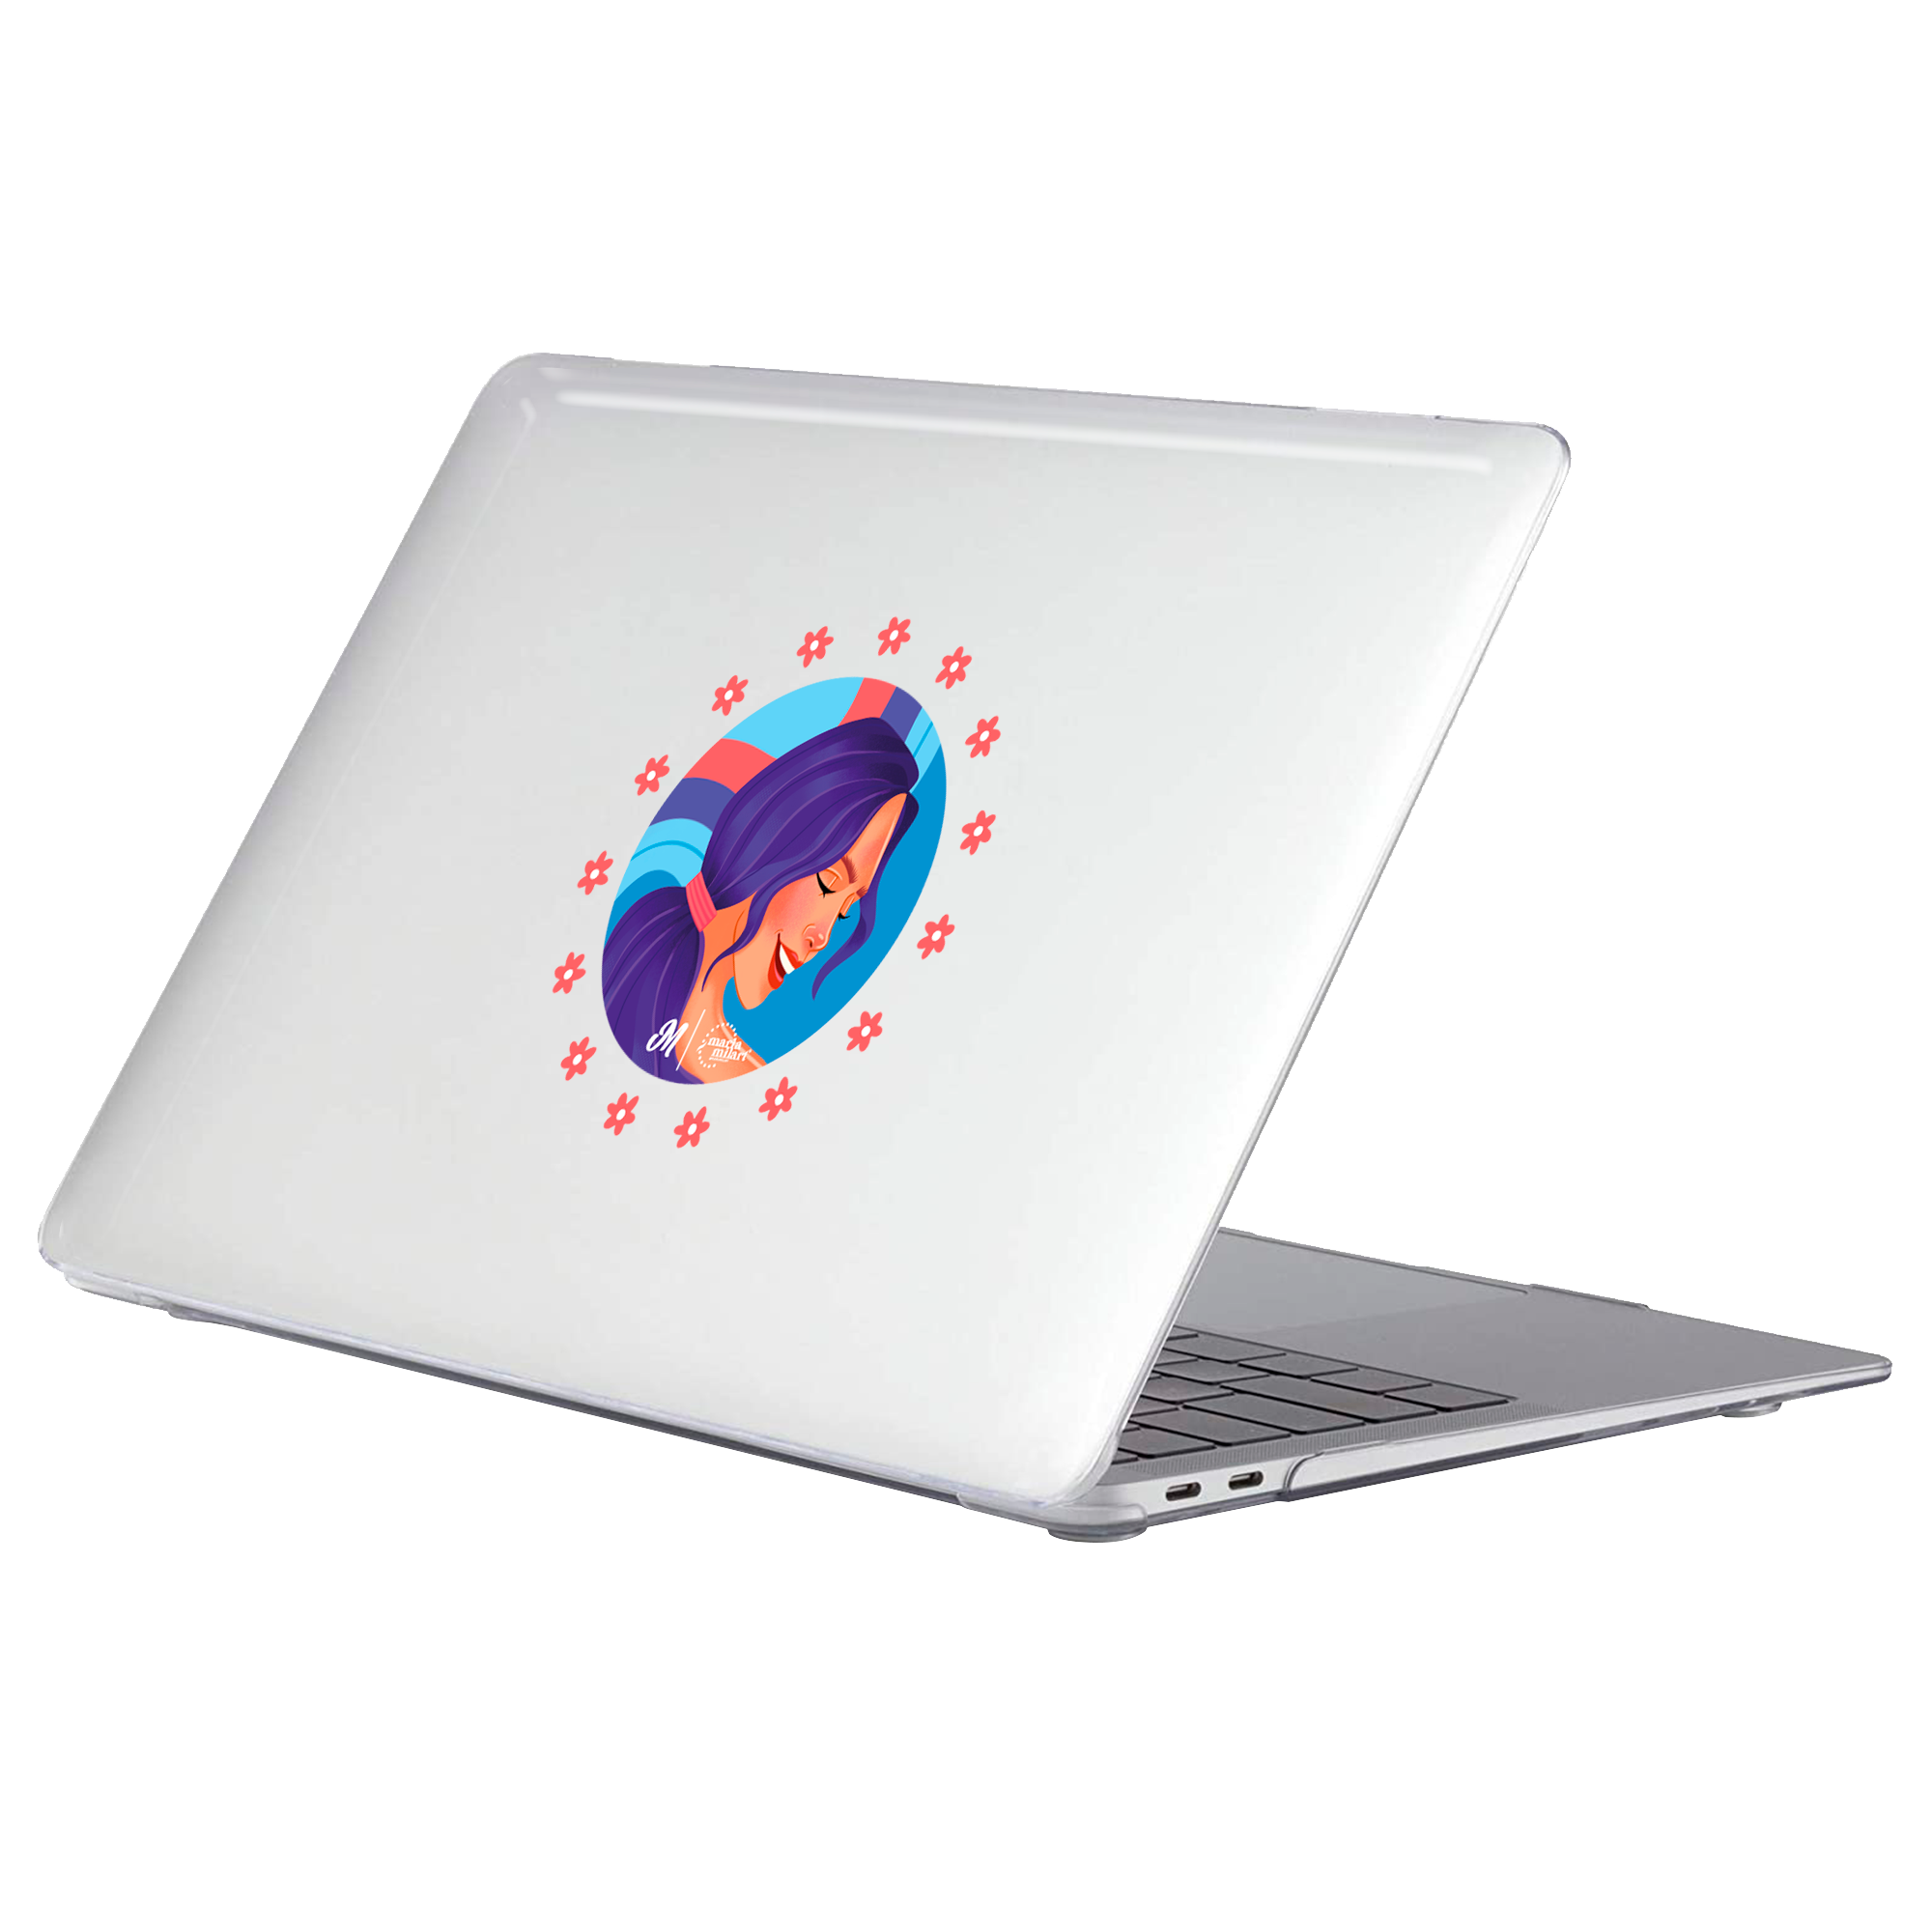 Flores Preciosas MacBook Case - Mandala Cases